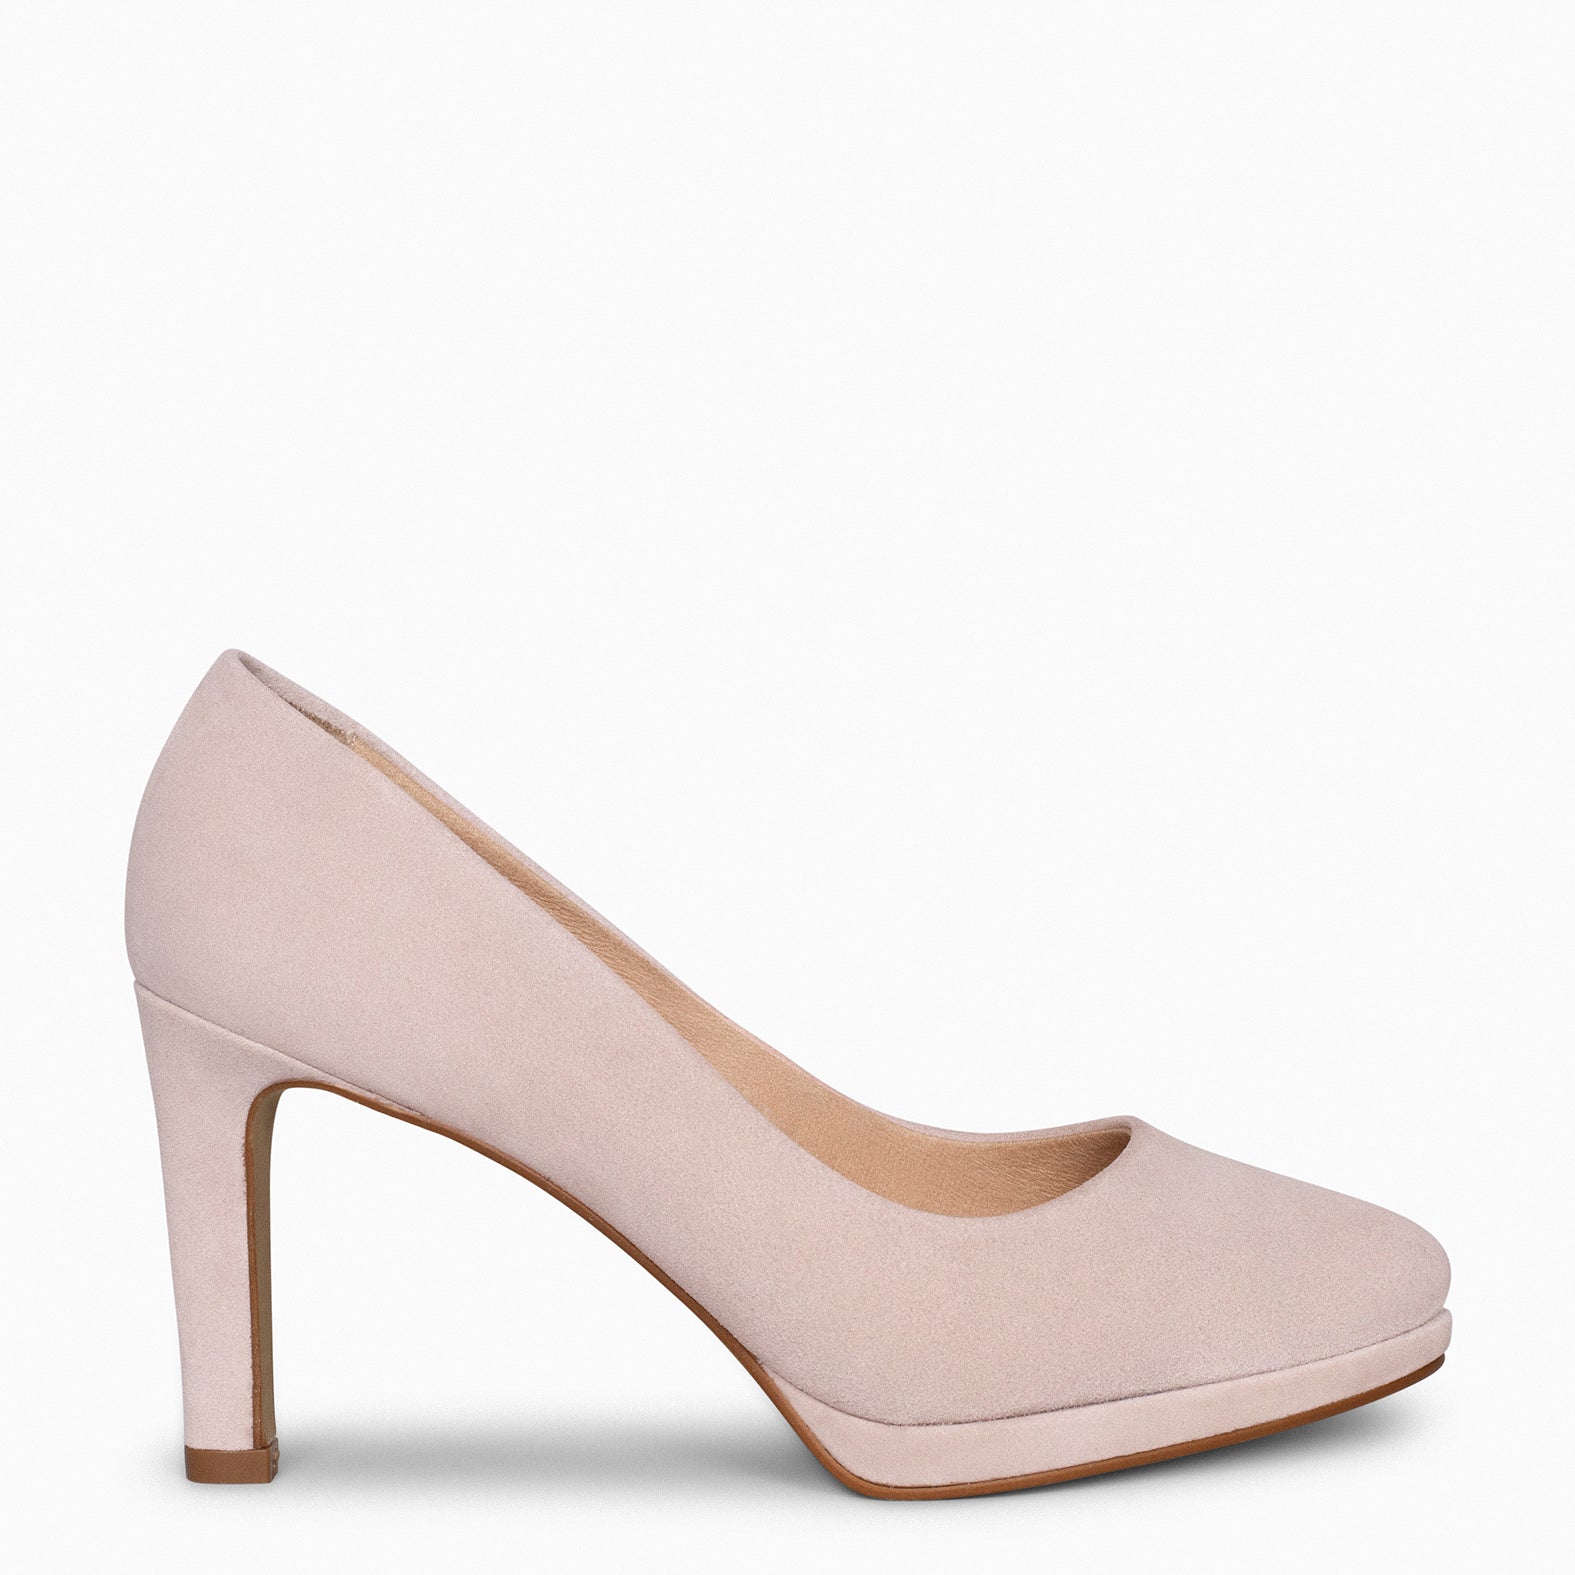 PLATFORM – NUDE high heels with platform